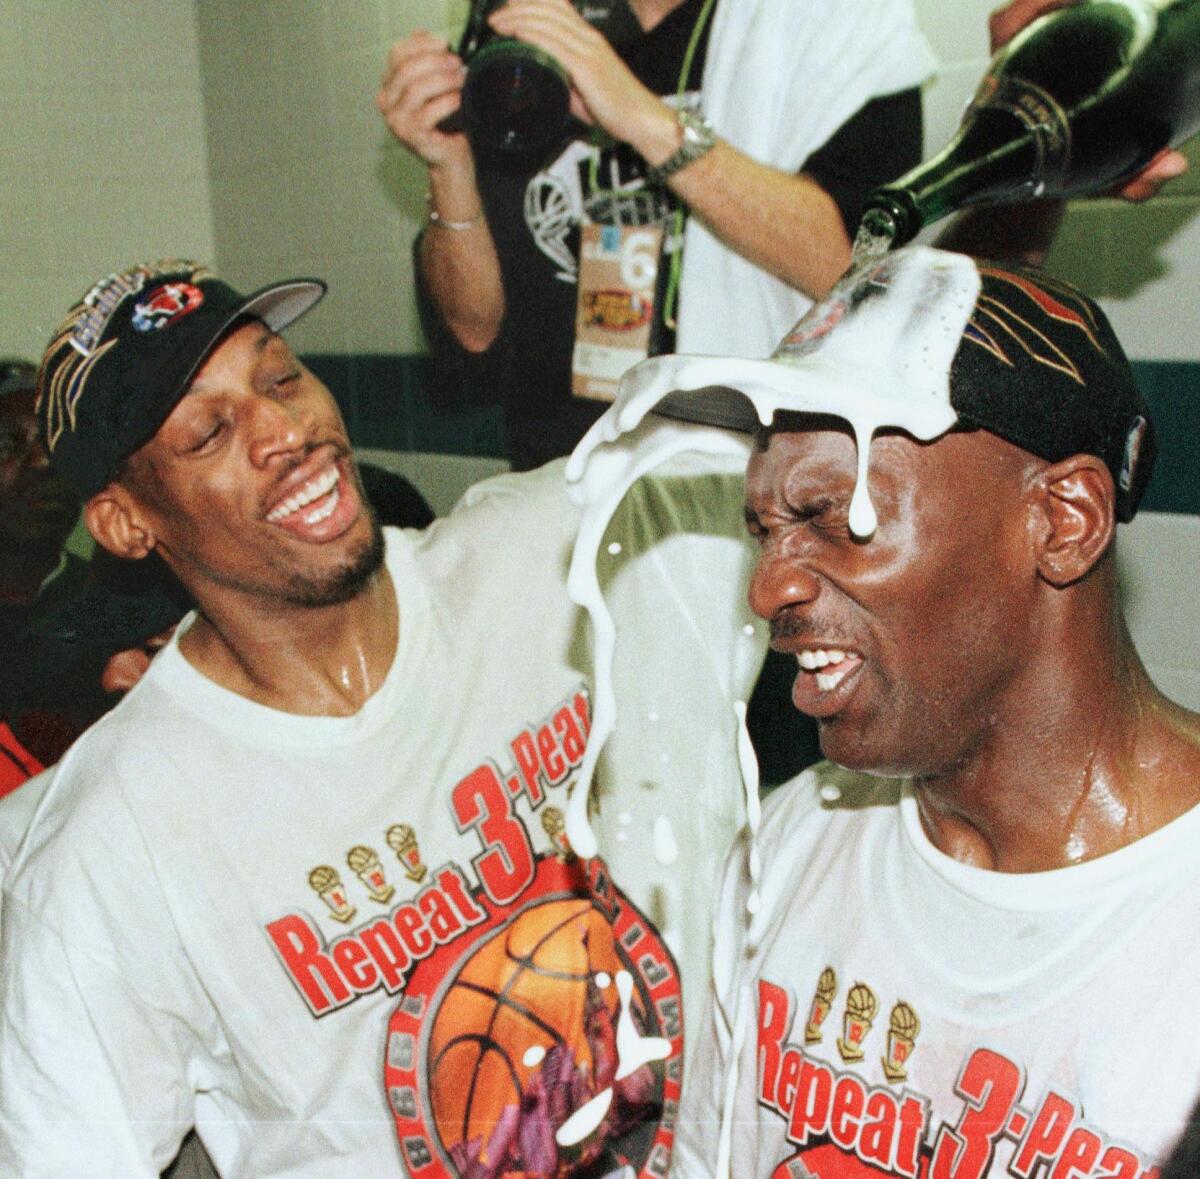 Chicago Bulls Dennis Rodman's Michael Jordan and Scottie Pippen